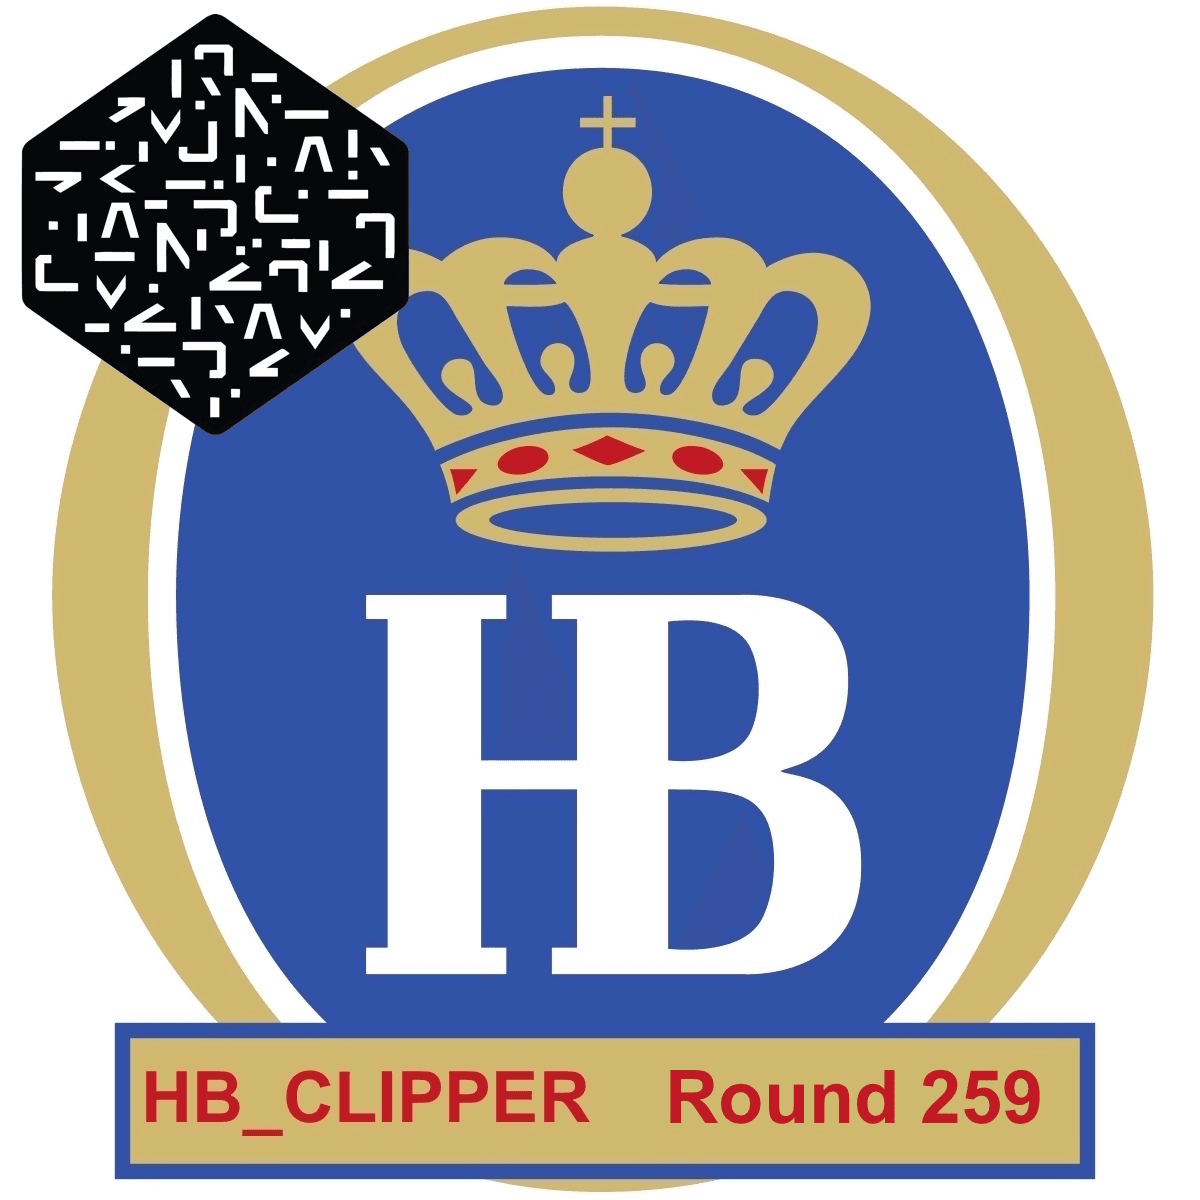 HB_CLIPPER Round 259 Numerai